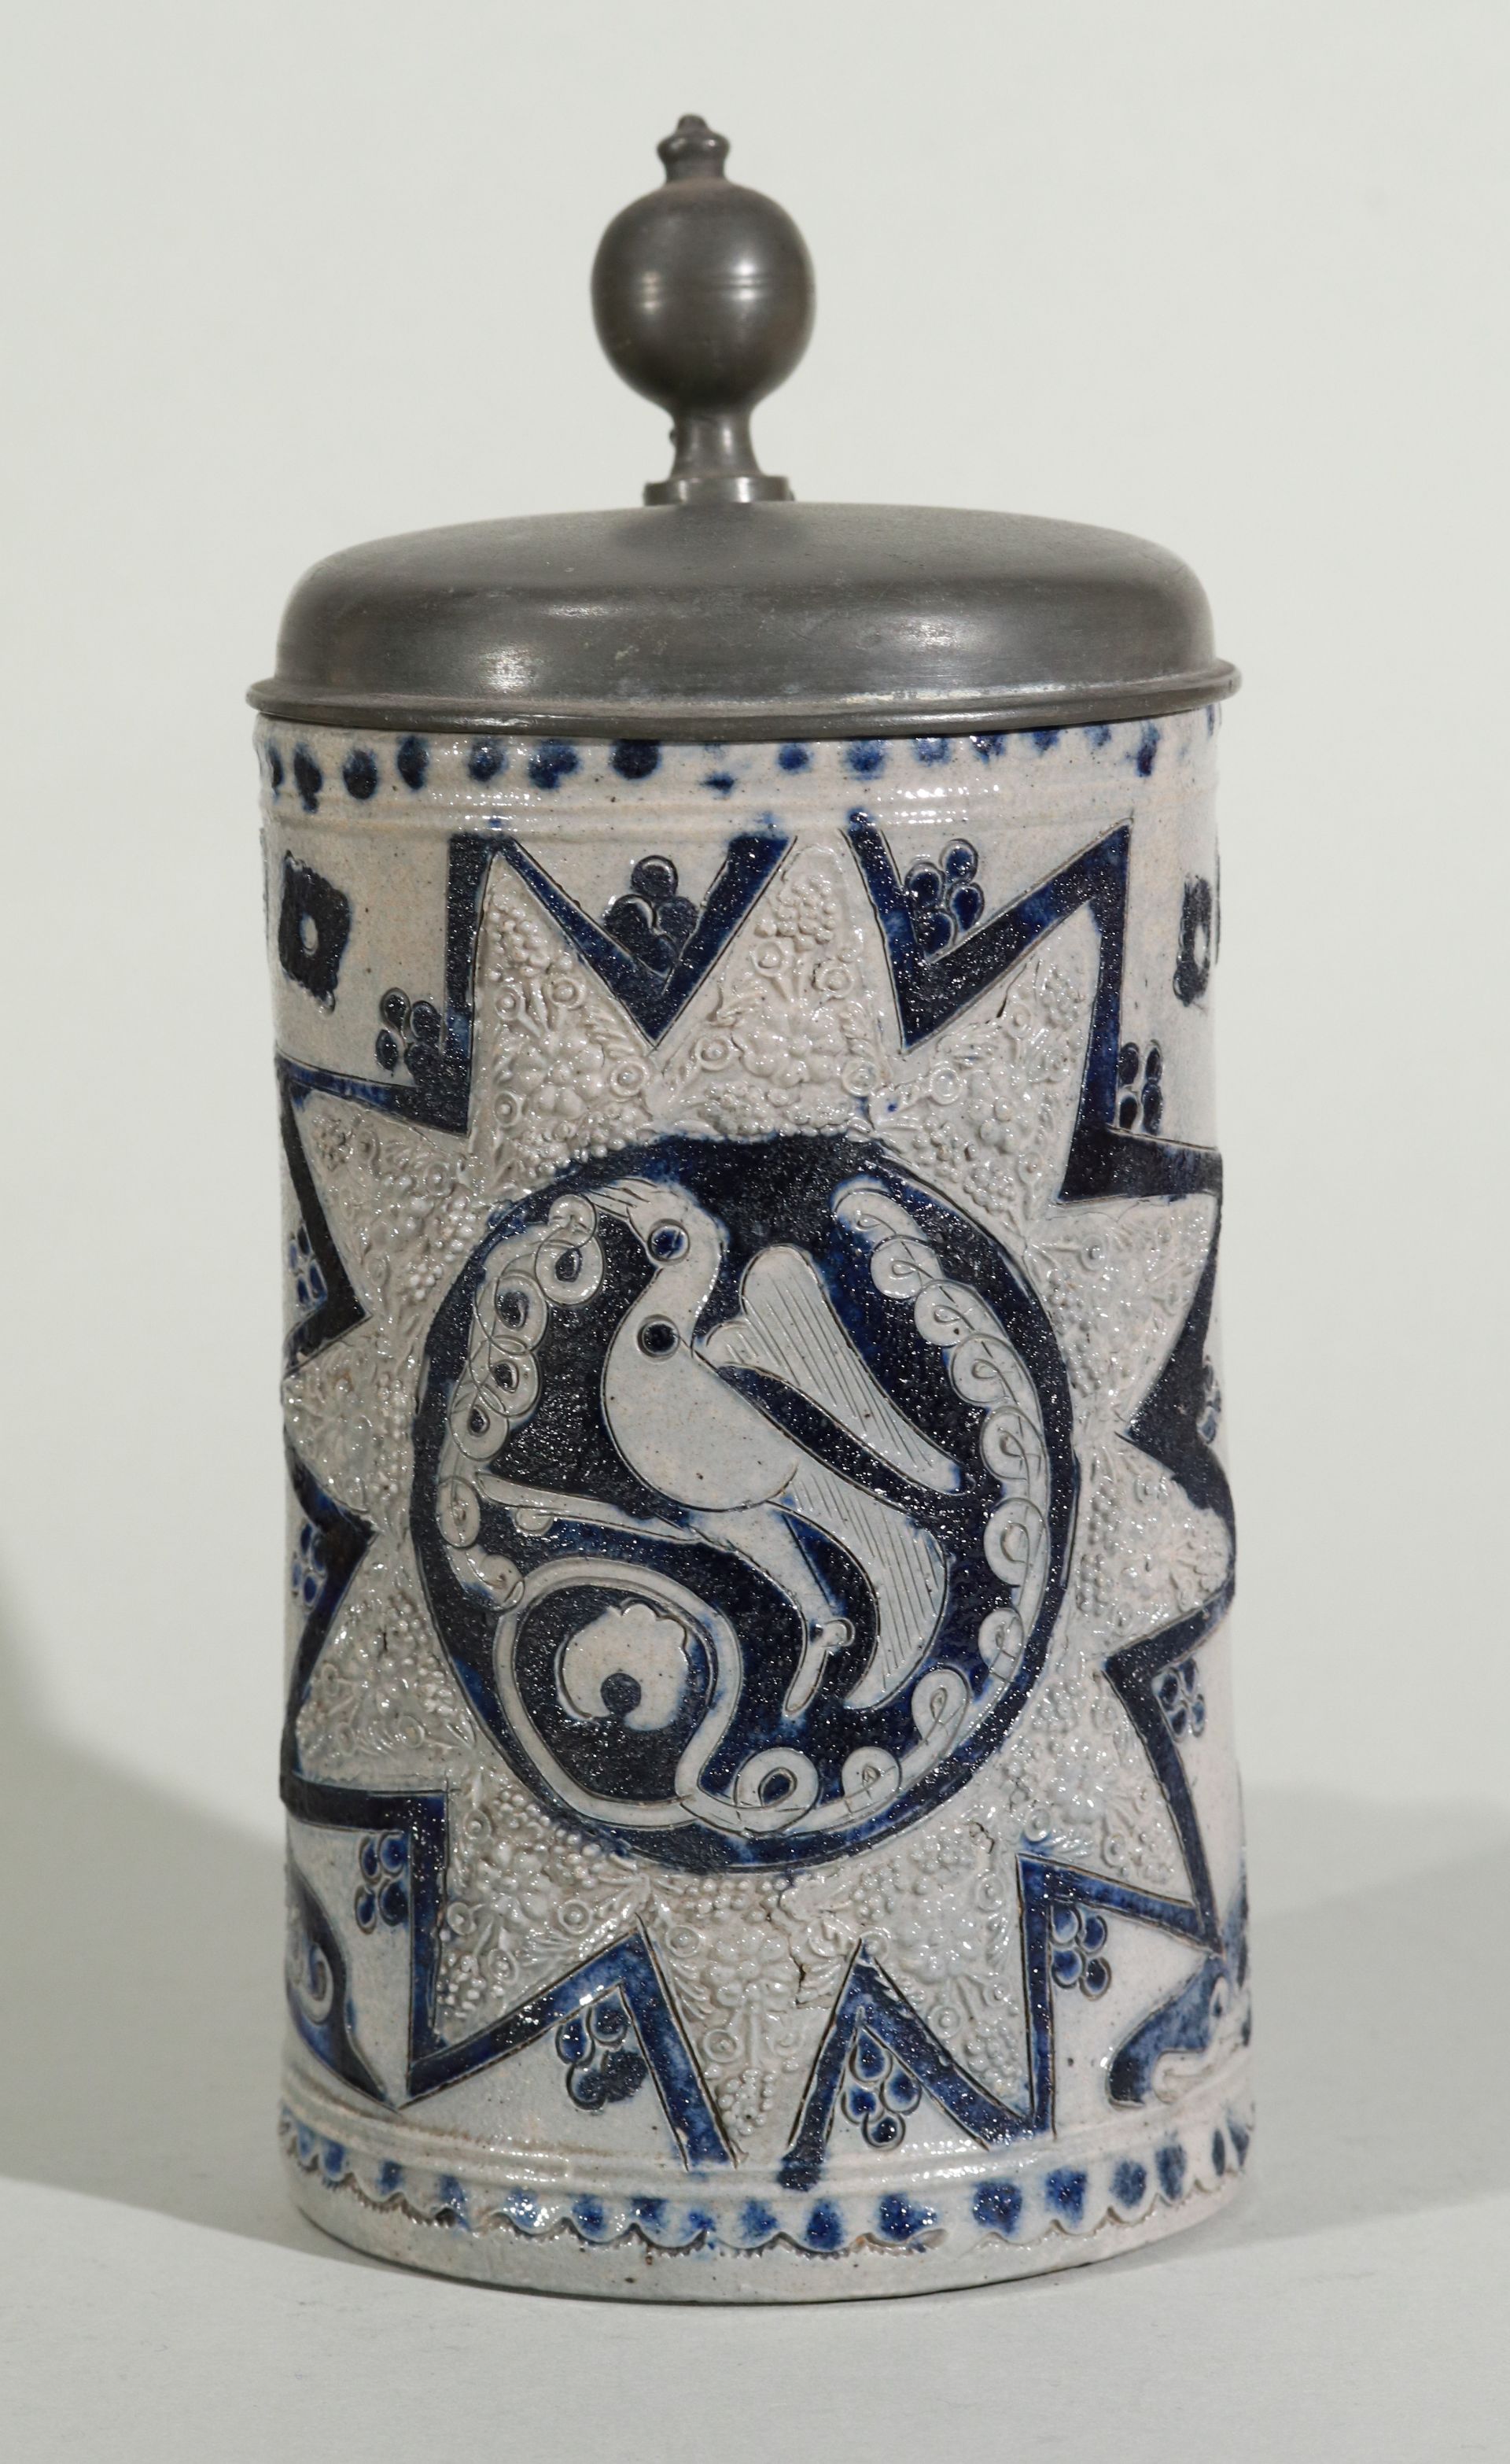 westerwald-tankard-walzenkrug-um-1760 - incised blue salt glazed salt glazed stoneware tankard